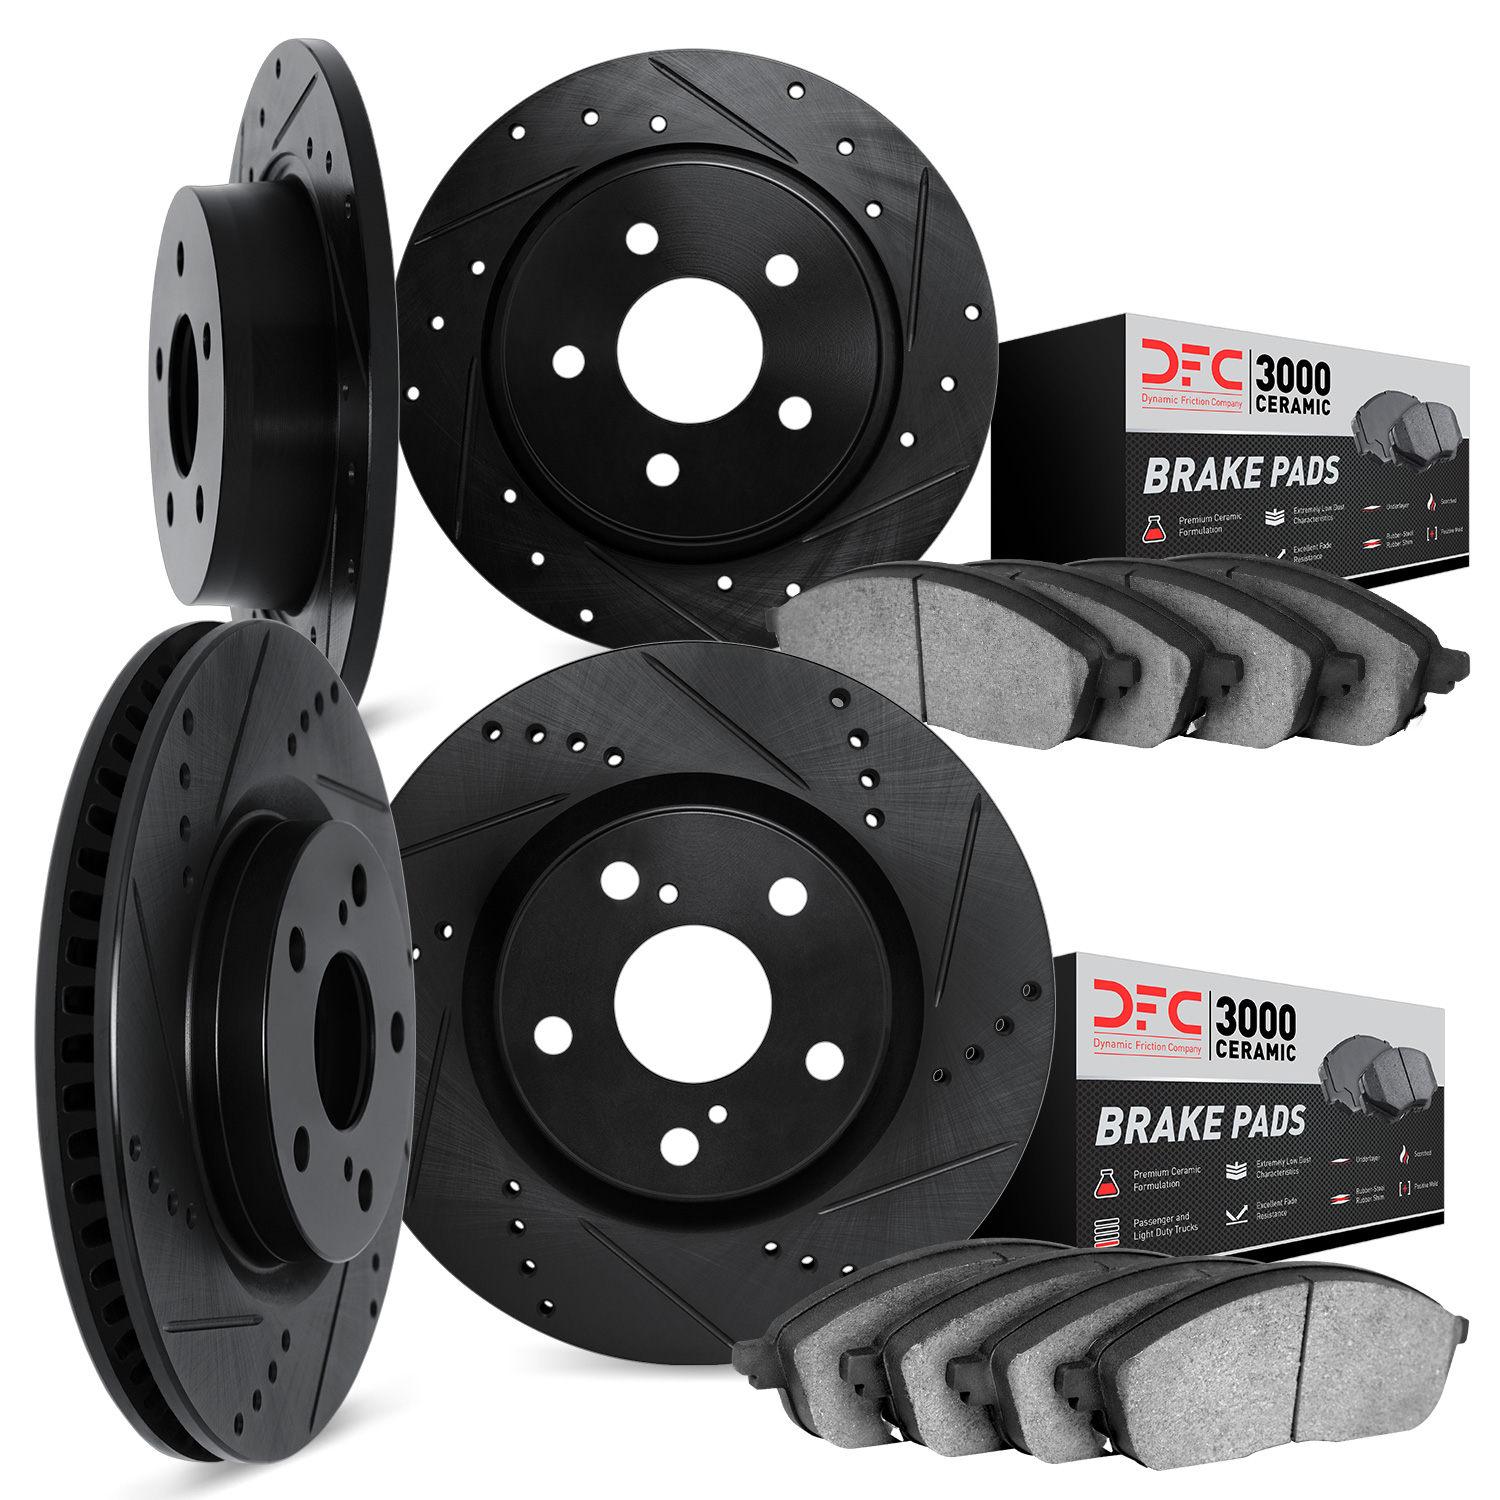 8304-54112 Drilled/Slotted Brake Rotors with 3000-Series Ceramic Brake Pads Kit [Black], 2013-2014 Ford/Lincoln/Mercury/Mazda, P